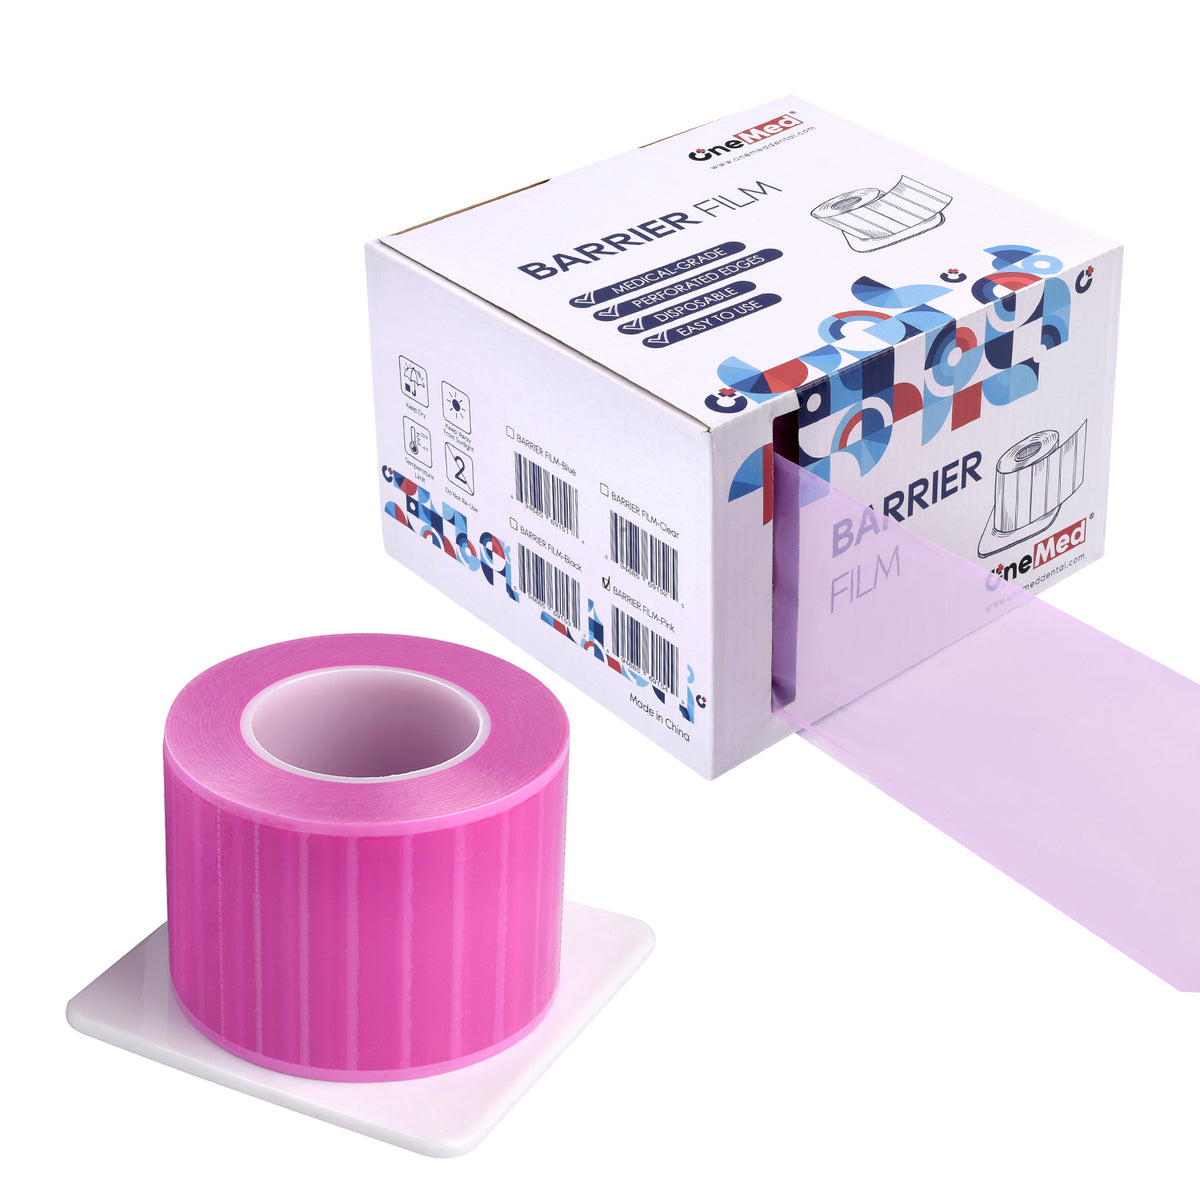 OneMed Dental Barrier Film Pink 2 Rolls 2400 Perforted Sheets 4"x6"